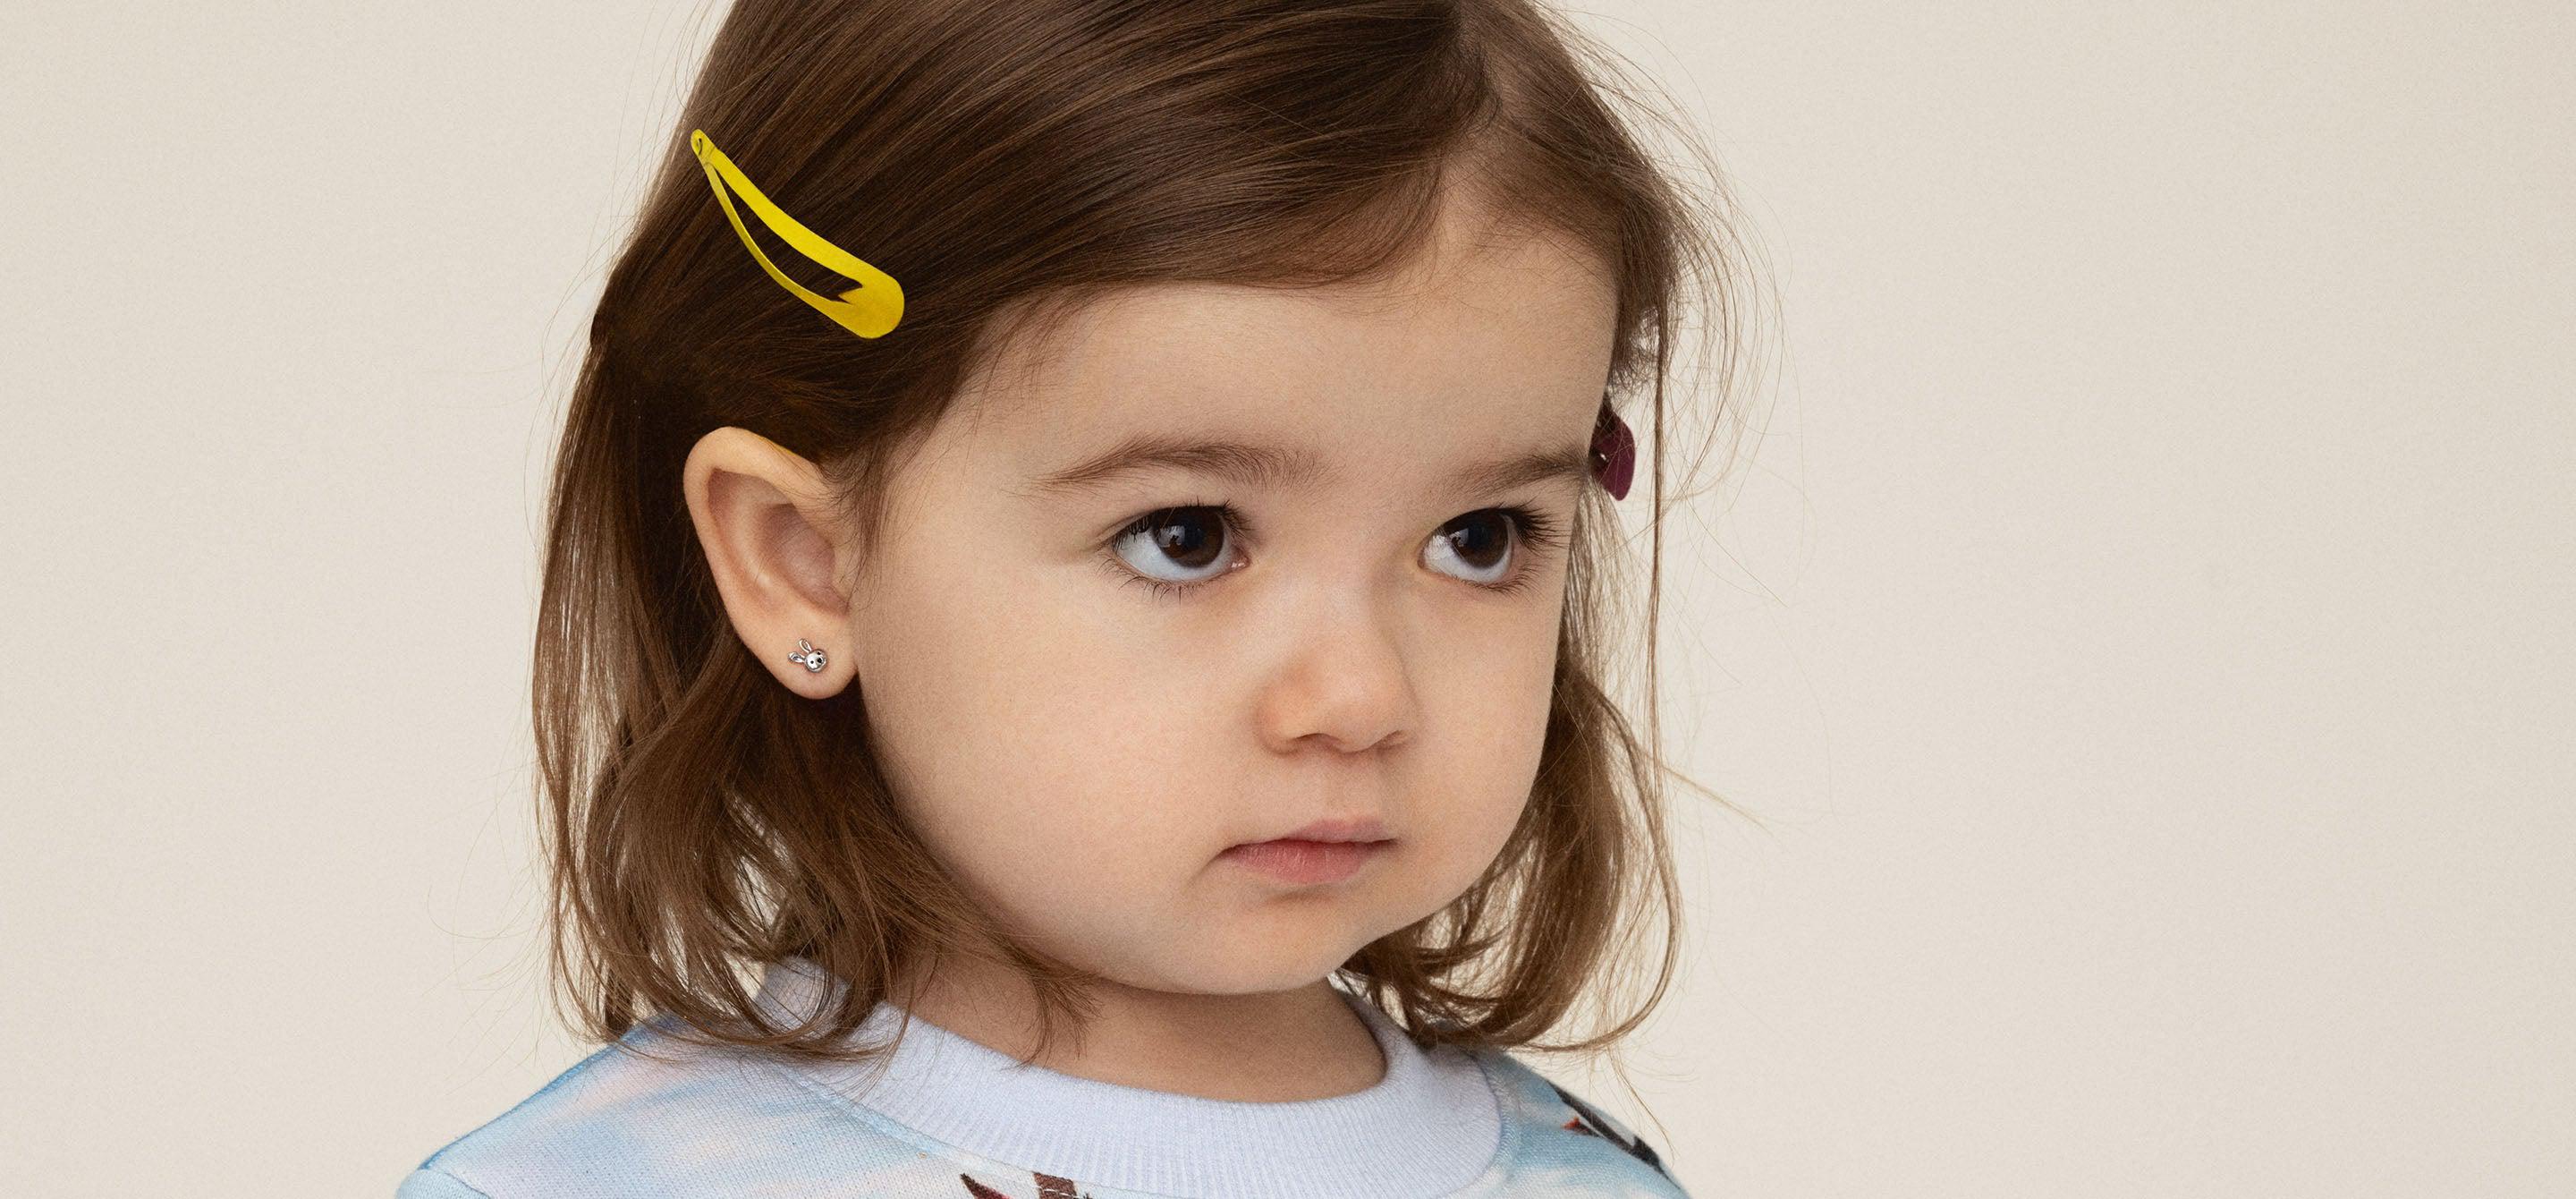 Baby Ear Piercing Near Me - Find Baby Ear Piercing Places on